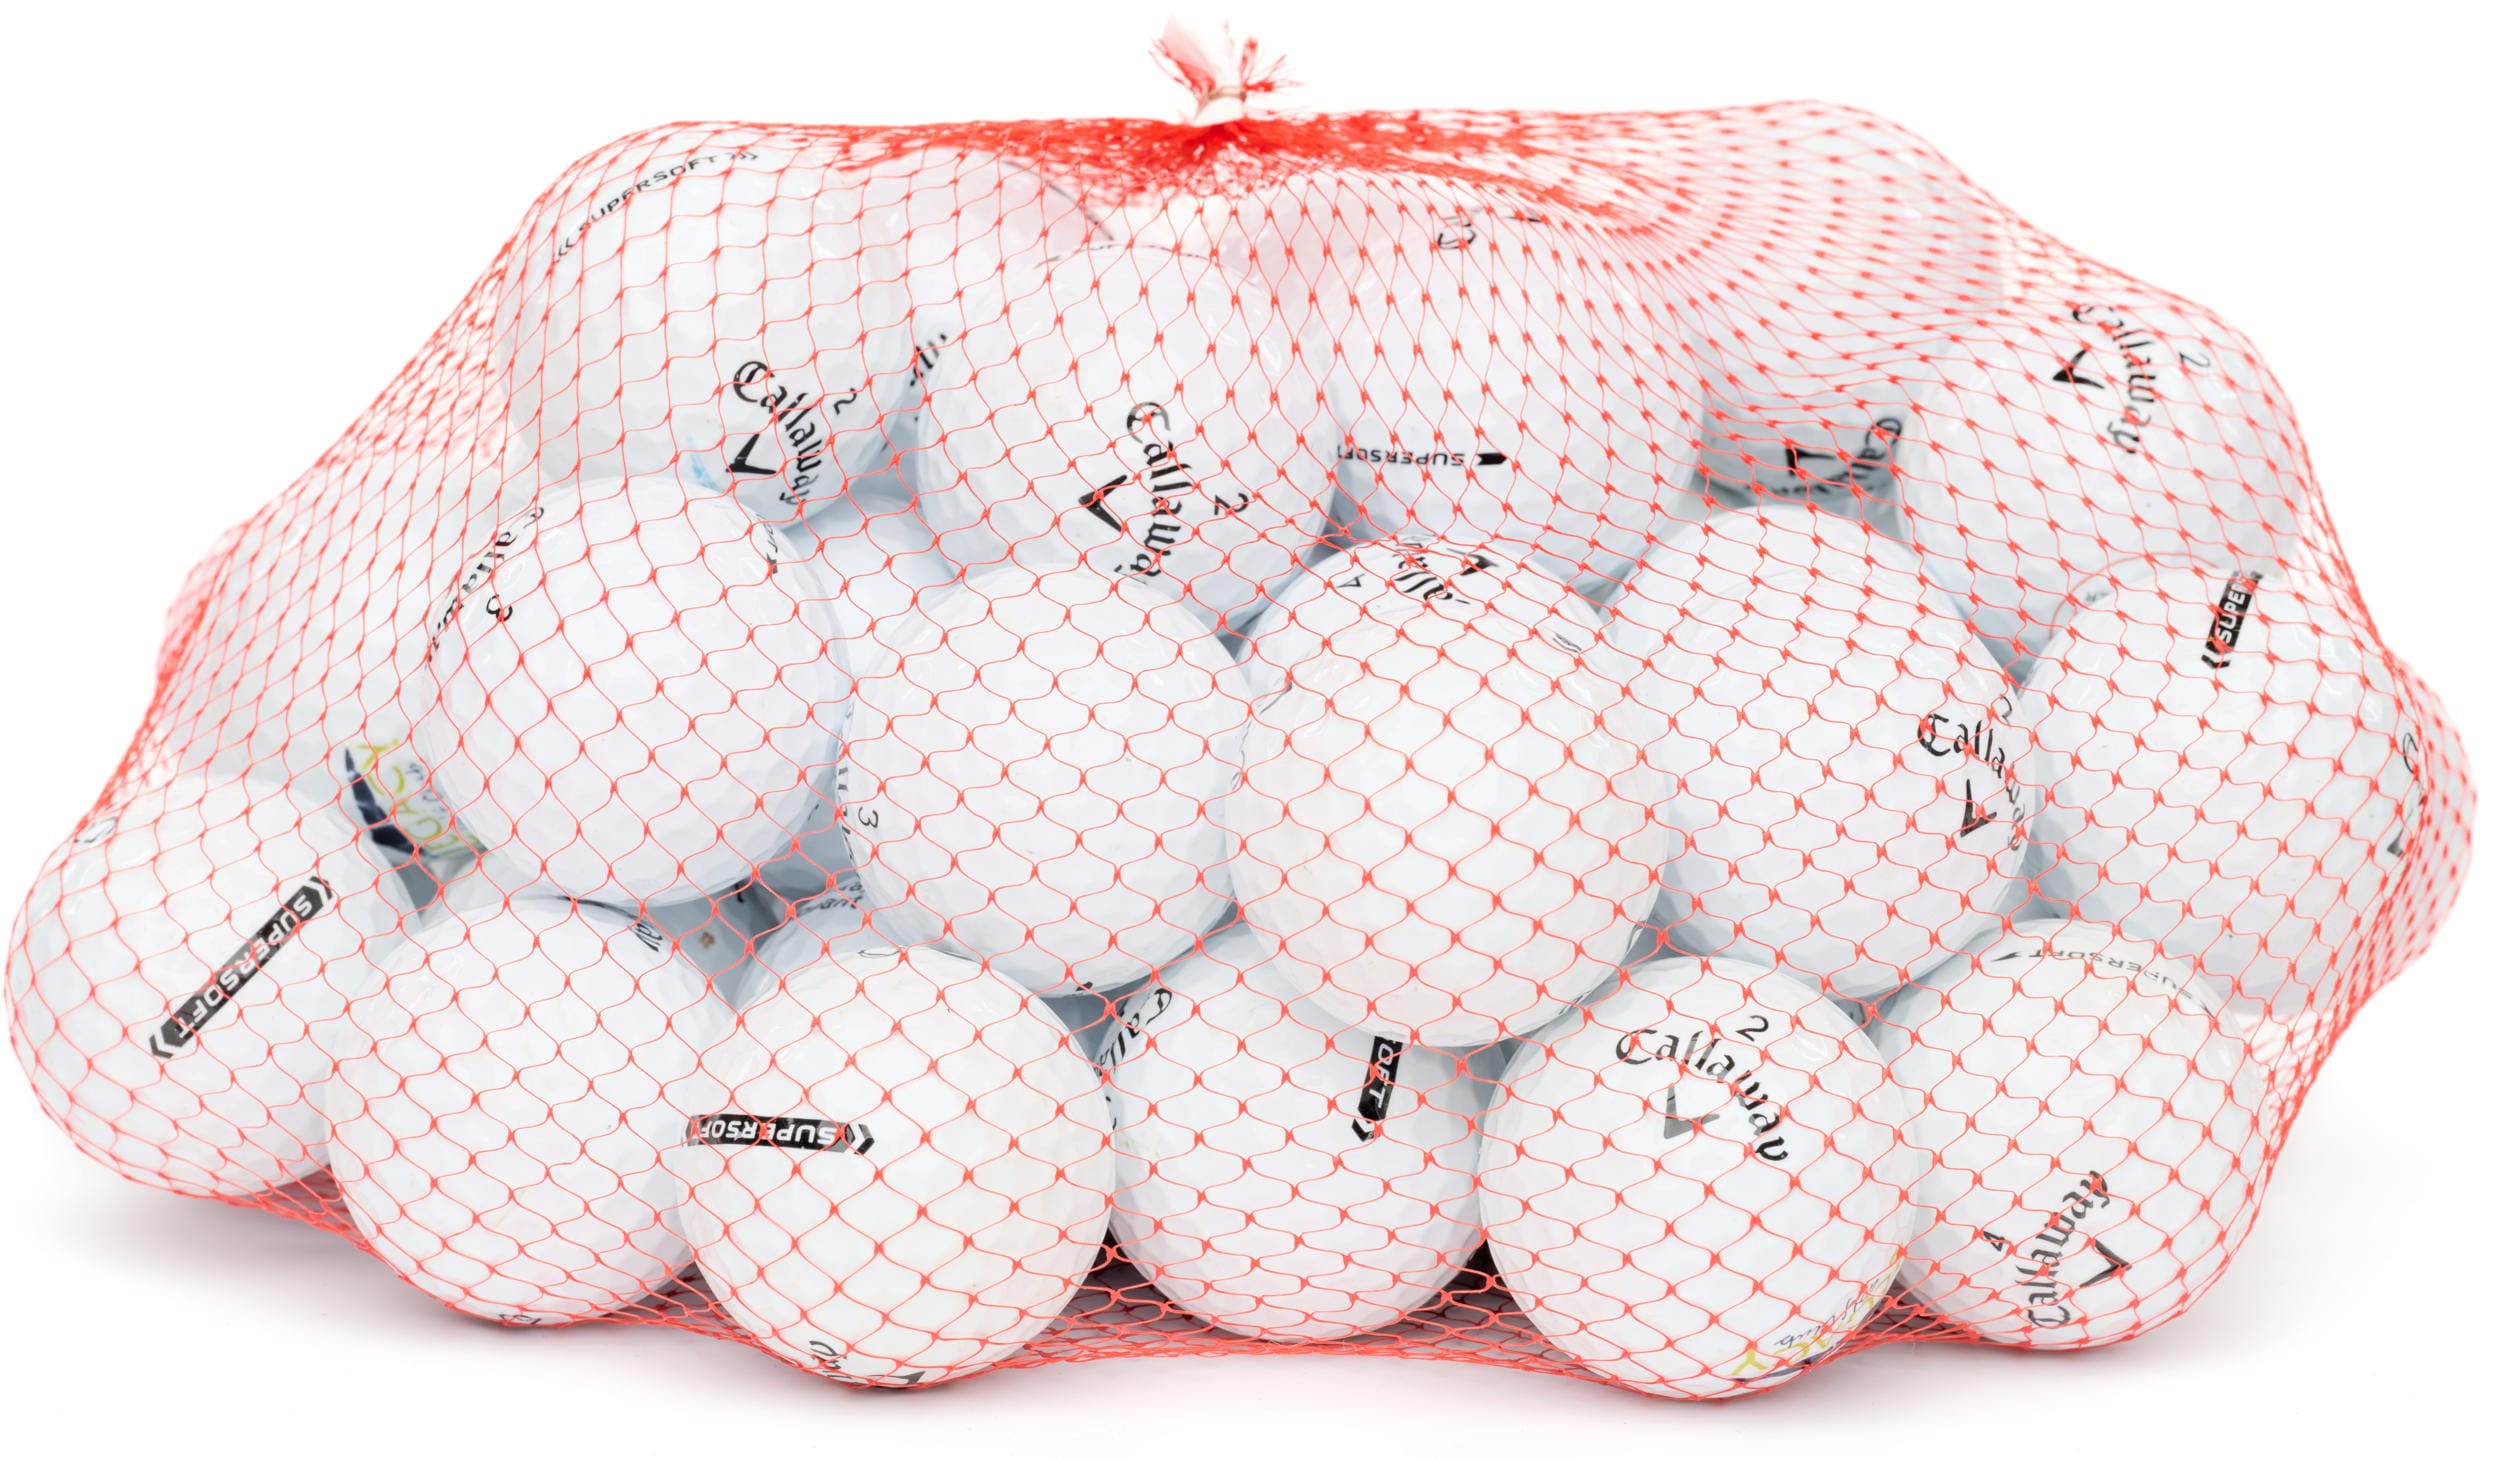 50 Callaway Supersoft Lakeballs, white